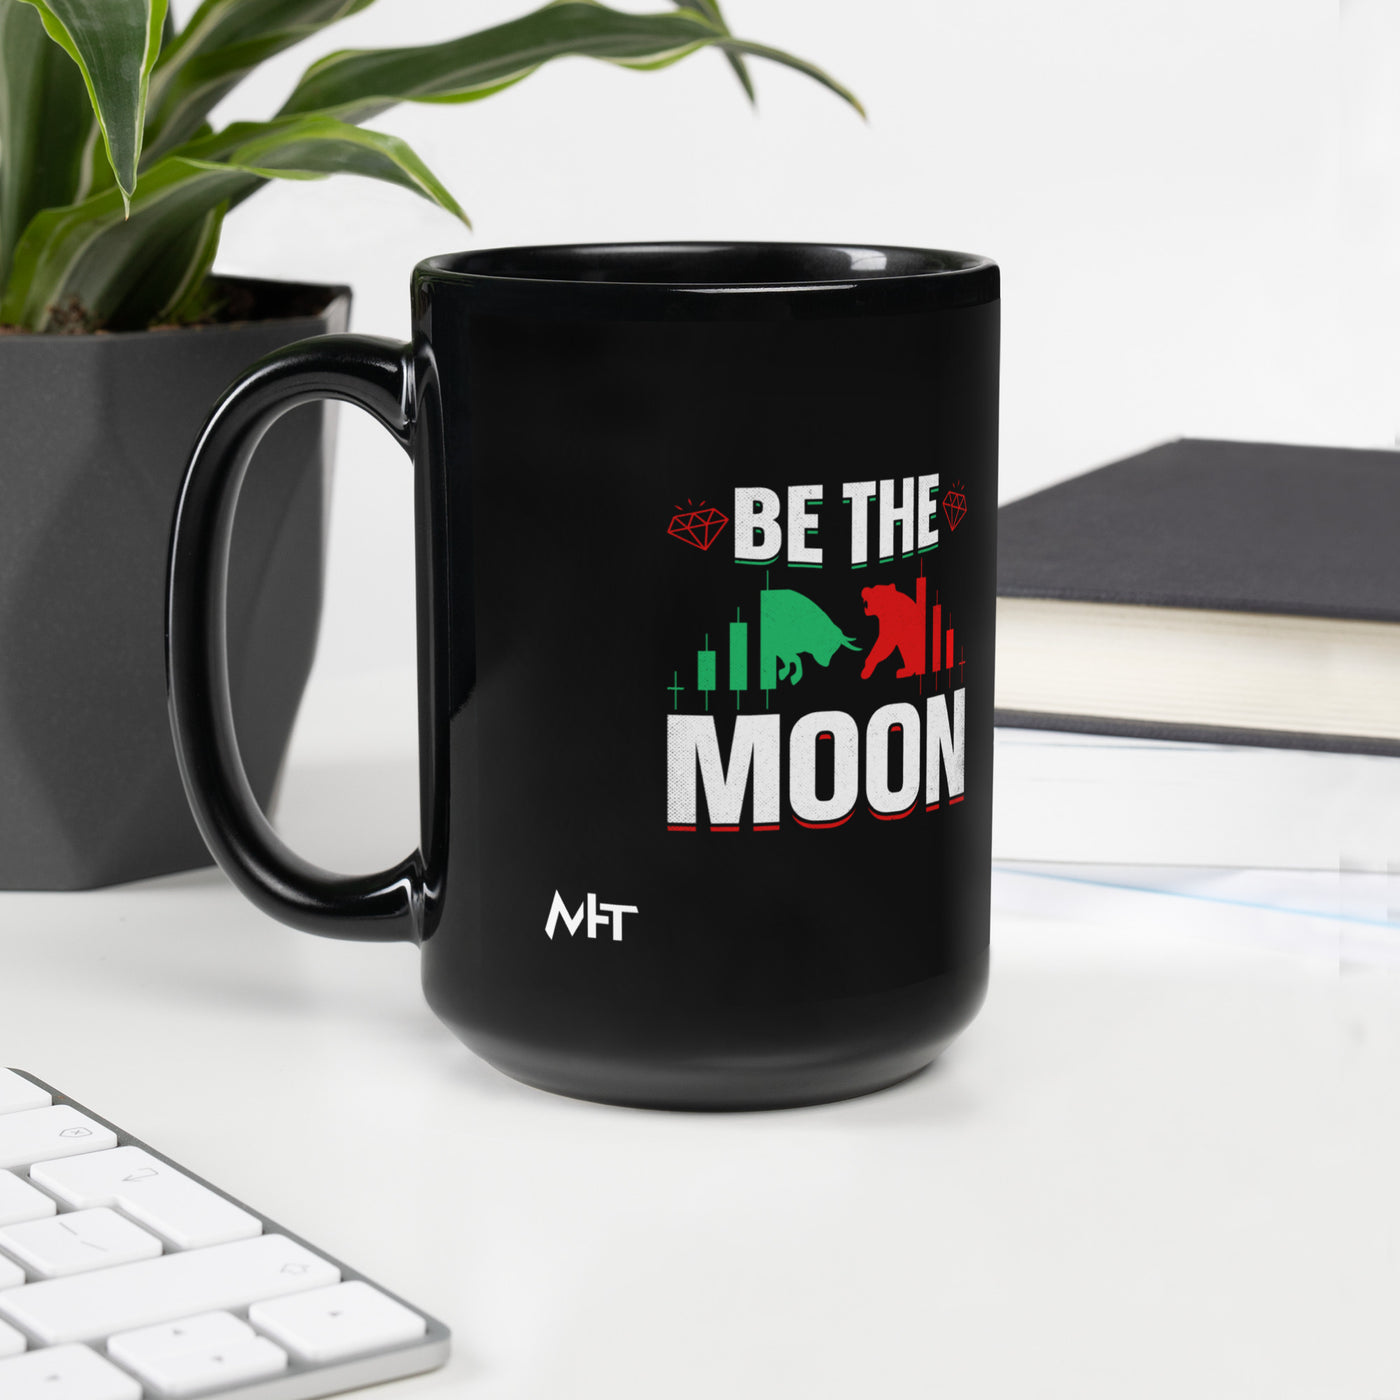 Be the Moon - Black Glossy Mug